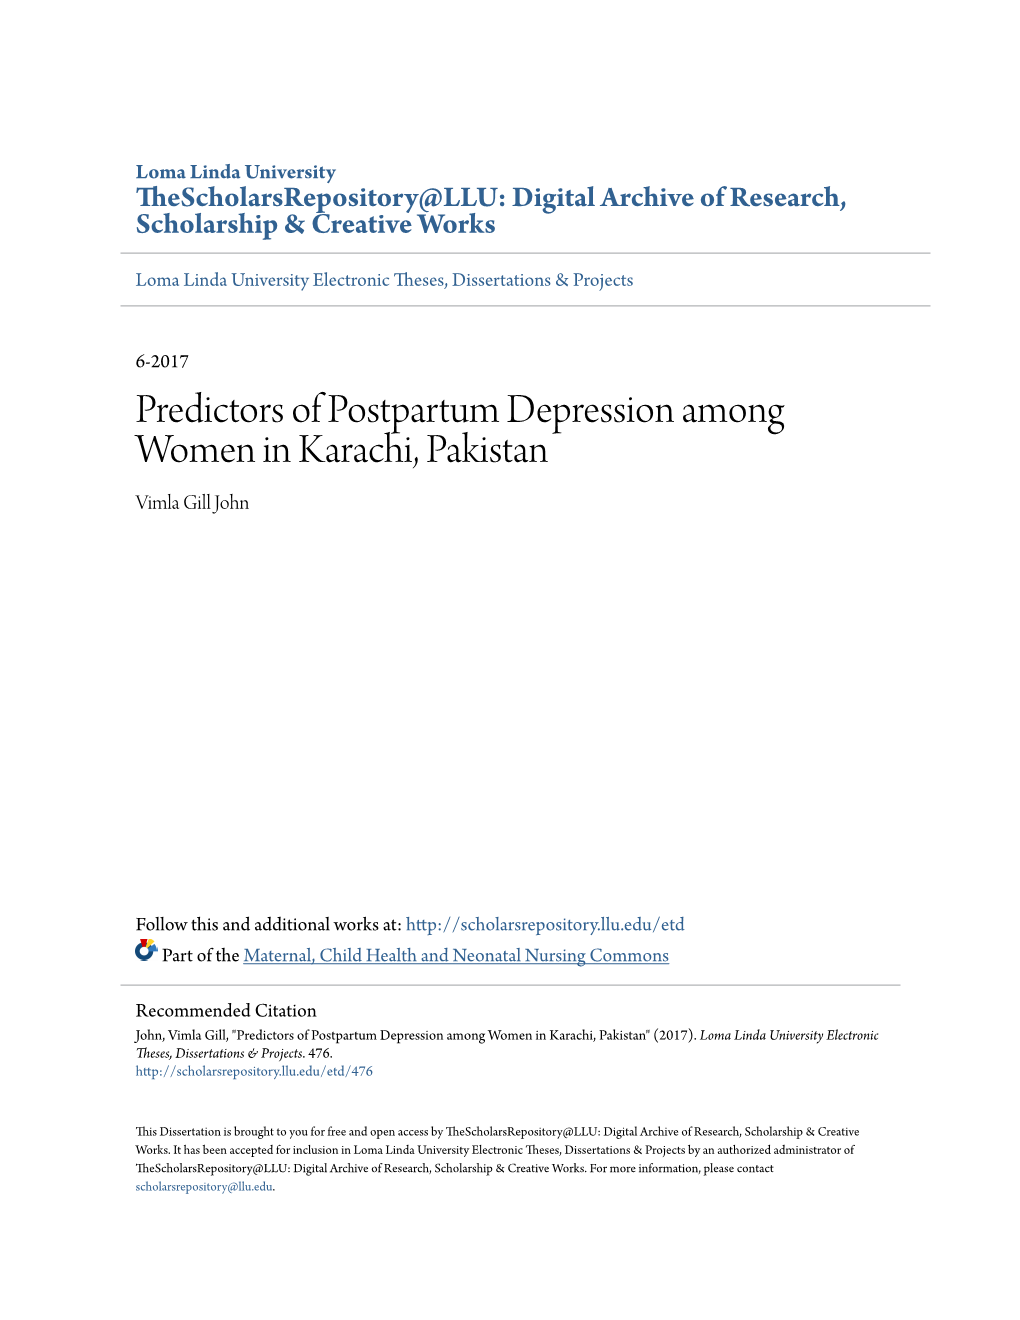 Predictors of Postpartum Depression Among Women in Karachi, Pakistan Vimla Gill John